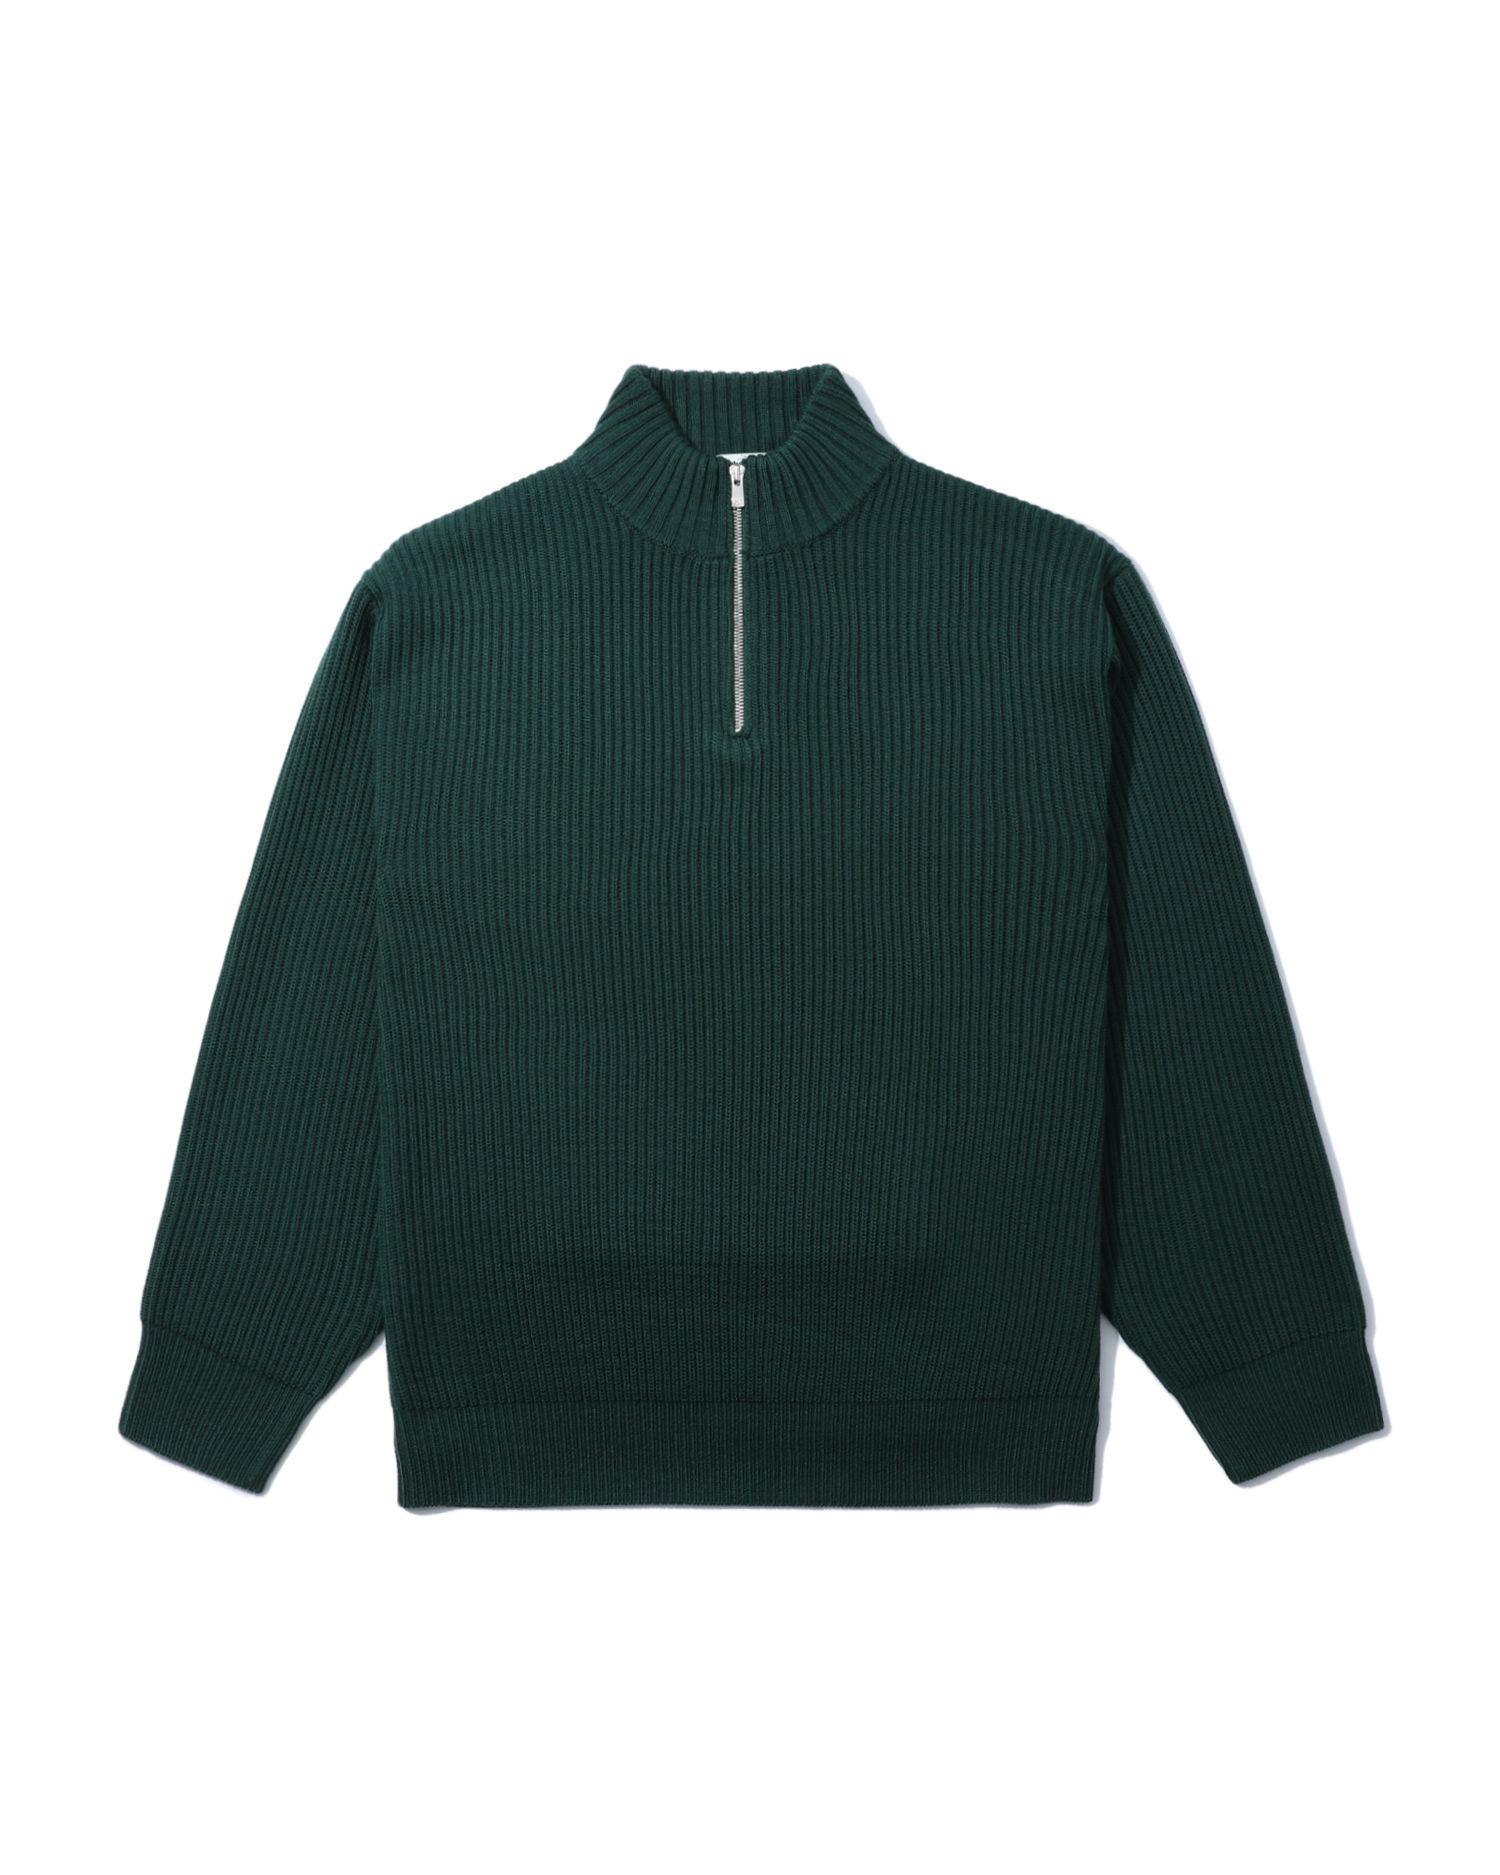 Half-zip knit sweater by BEAUTY&YOUTH MONKEY TIME